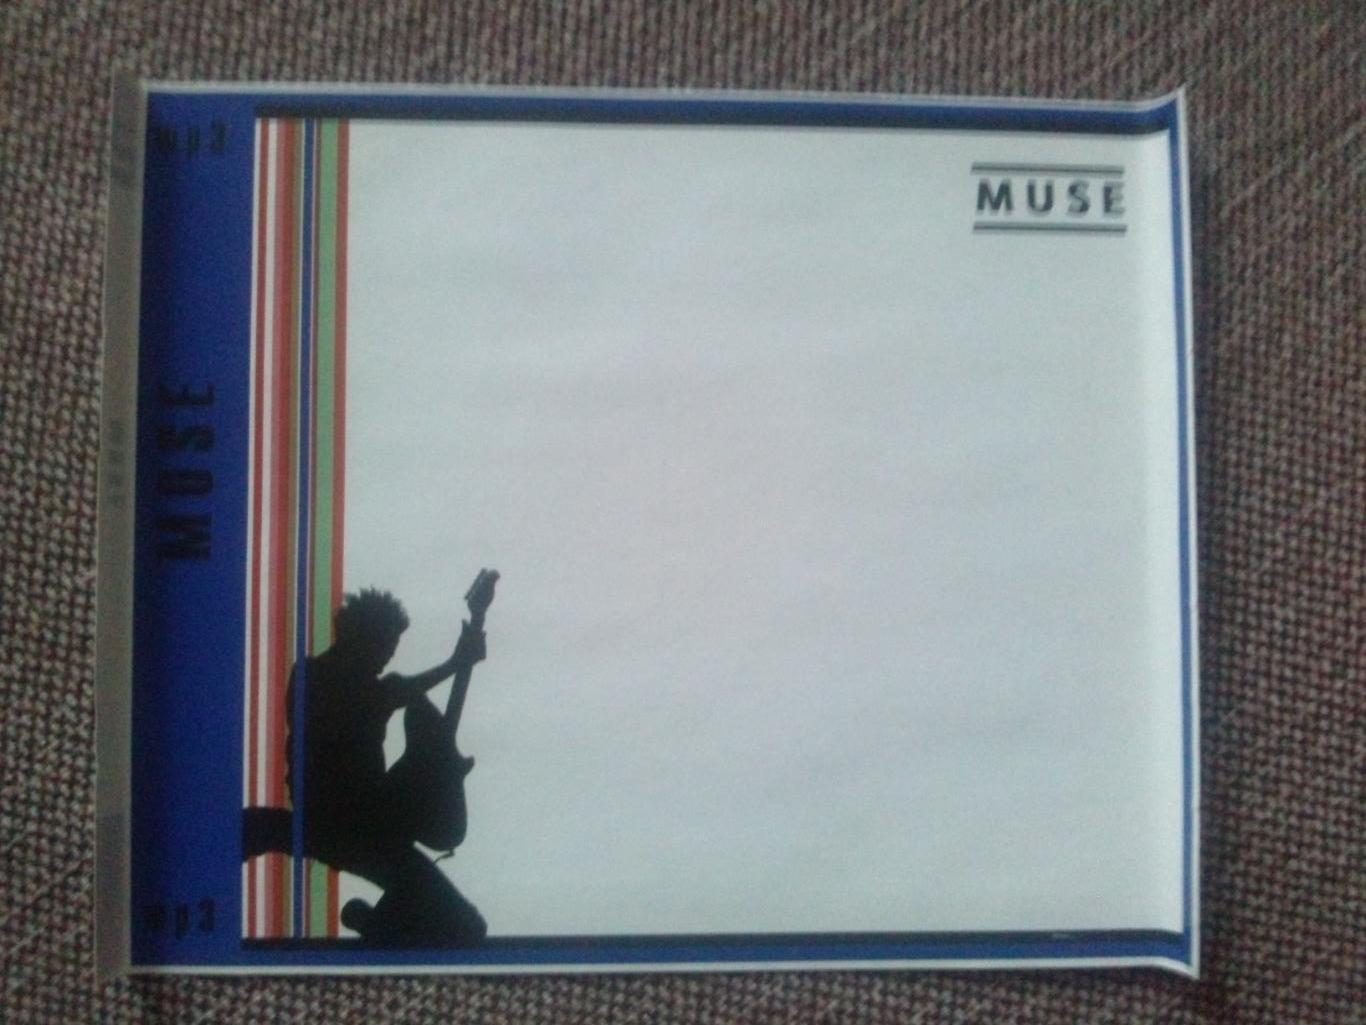 MP - 3 CD : группа Muse 1999 - 2006 гг. ( 6 альбомов) Рок - музыка 4